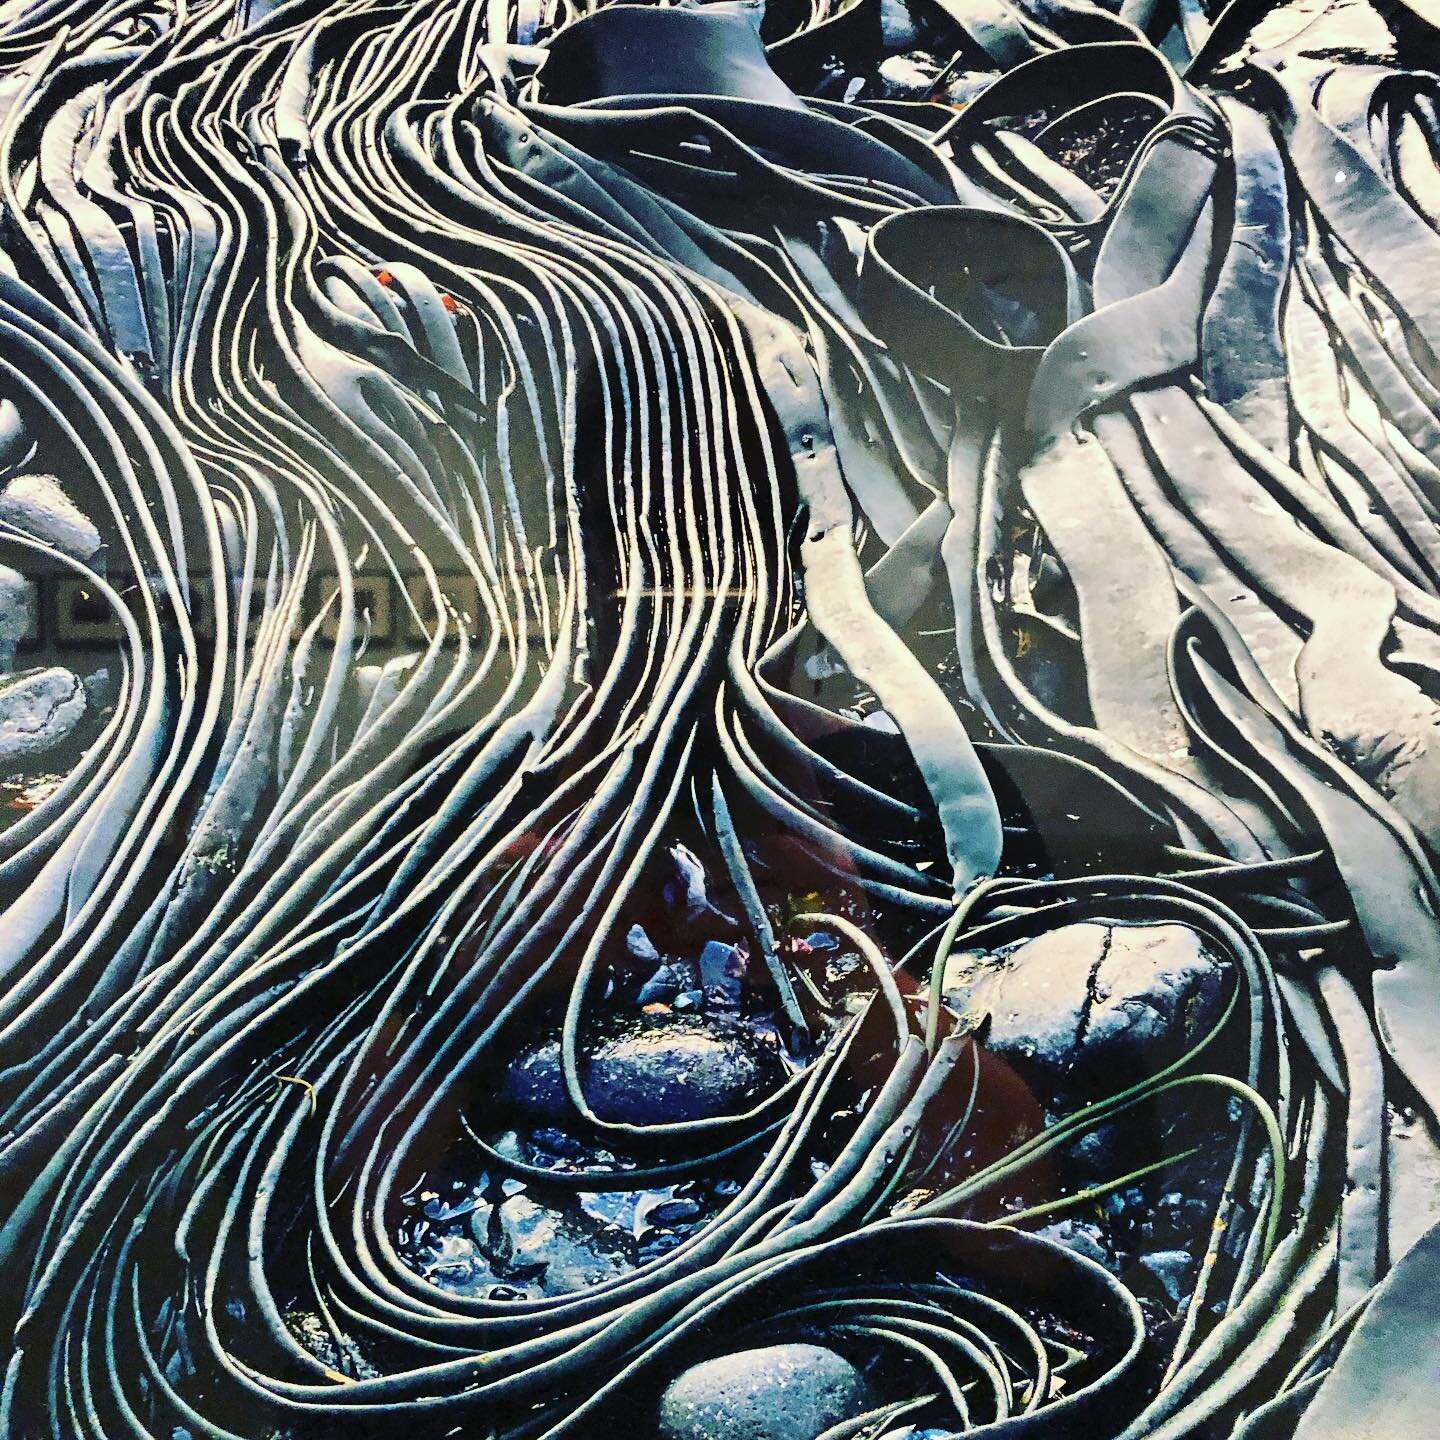 WATER | QAGOMA 2020

Peter Dombrovskis 
Giant Bull Kelp (1984)
Tasmania